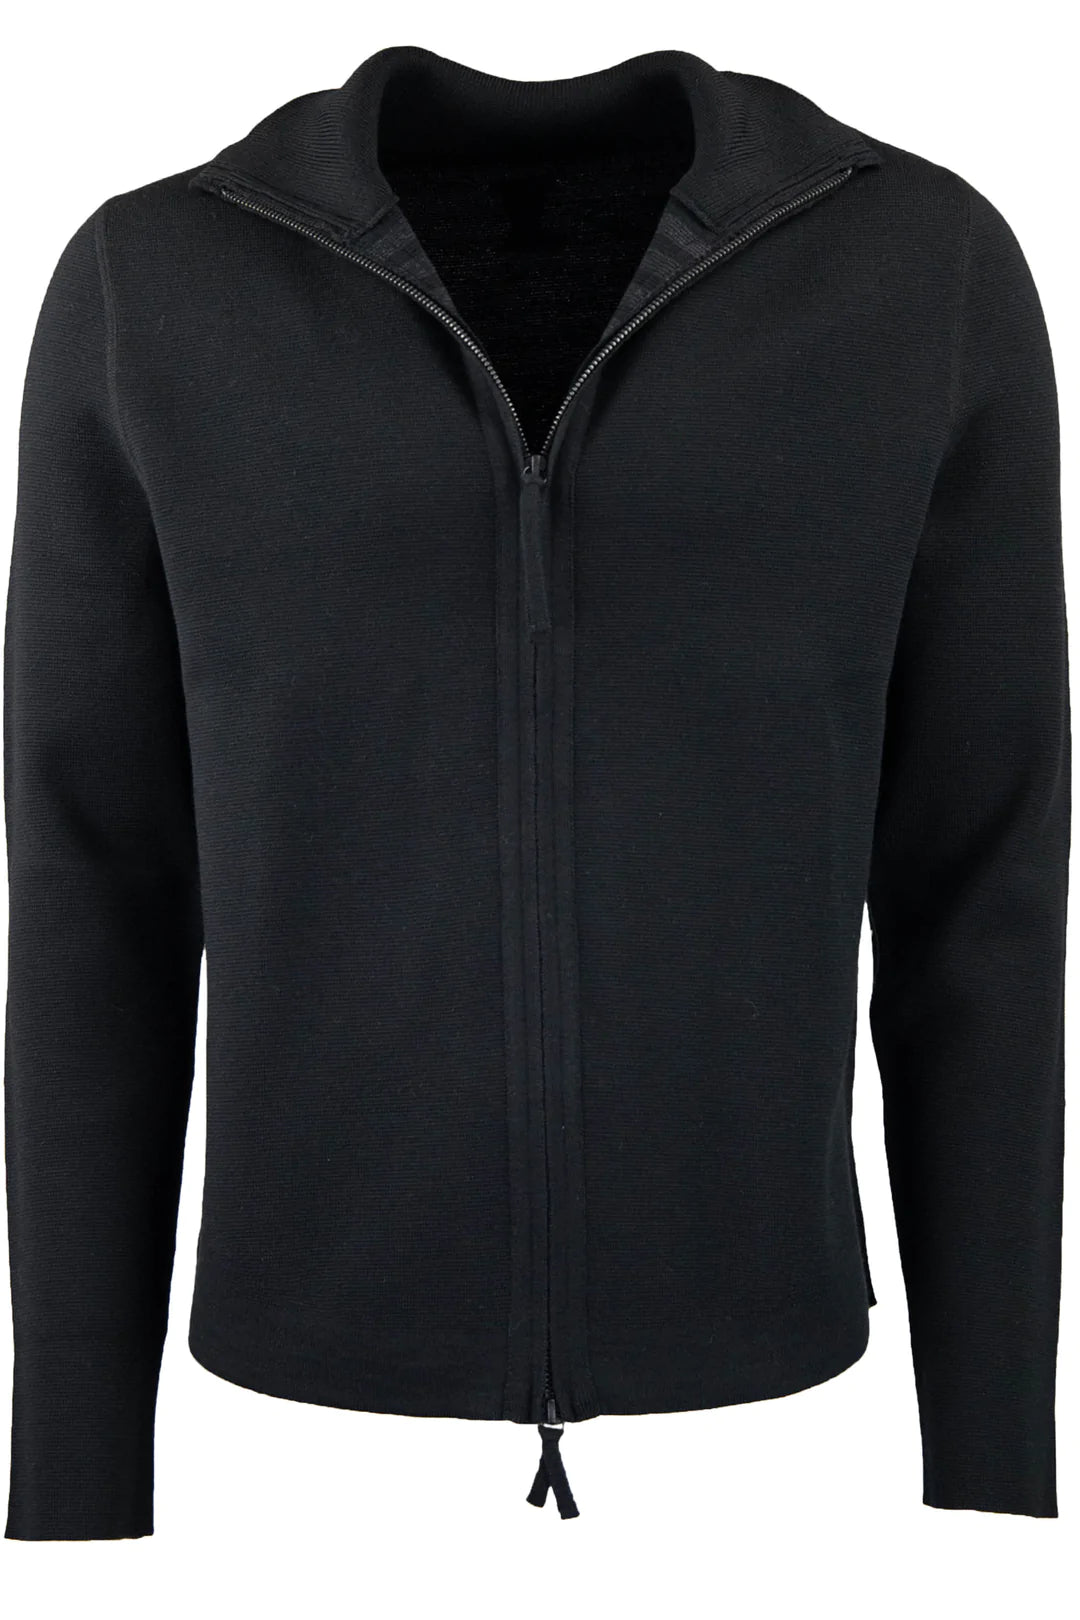 Male black zip jacket